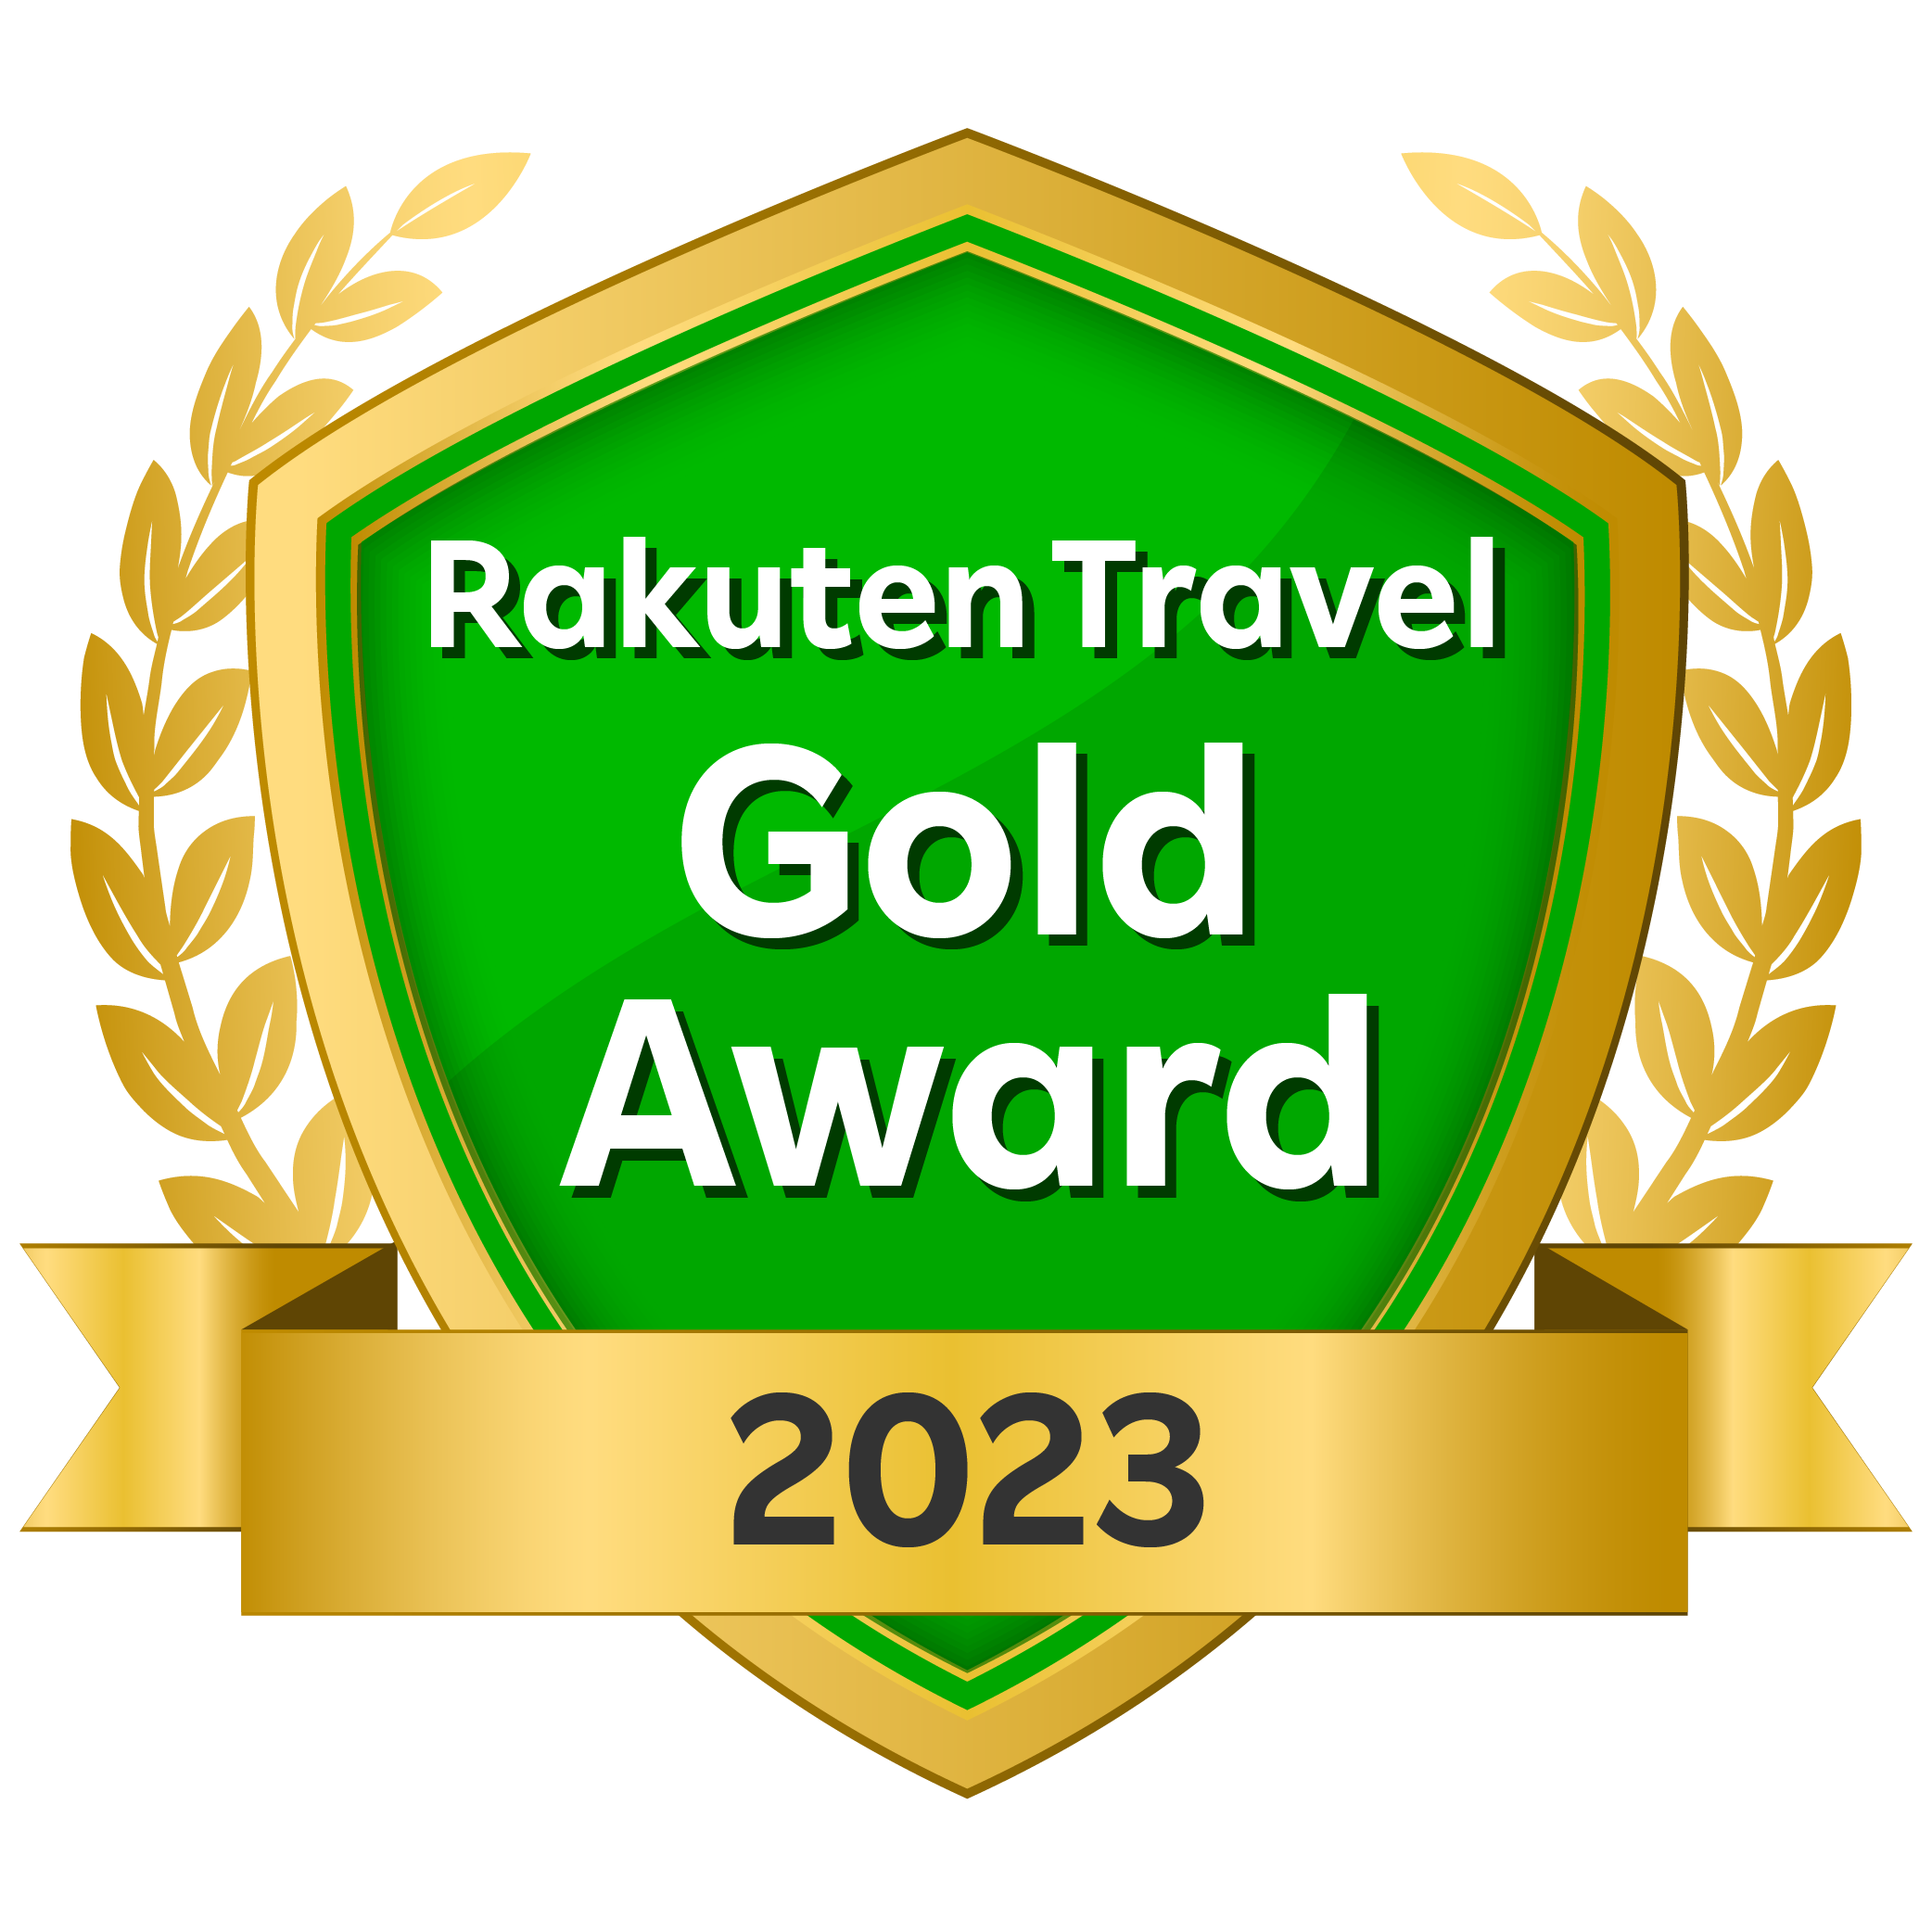 Rakuten Travel Gold Award 2022